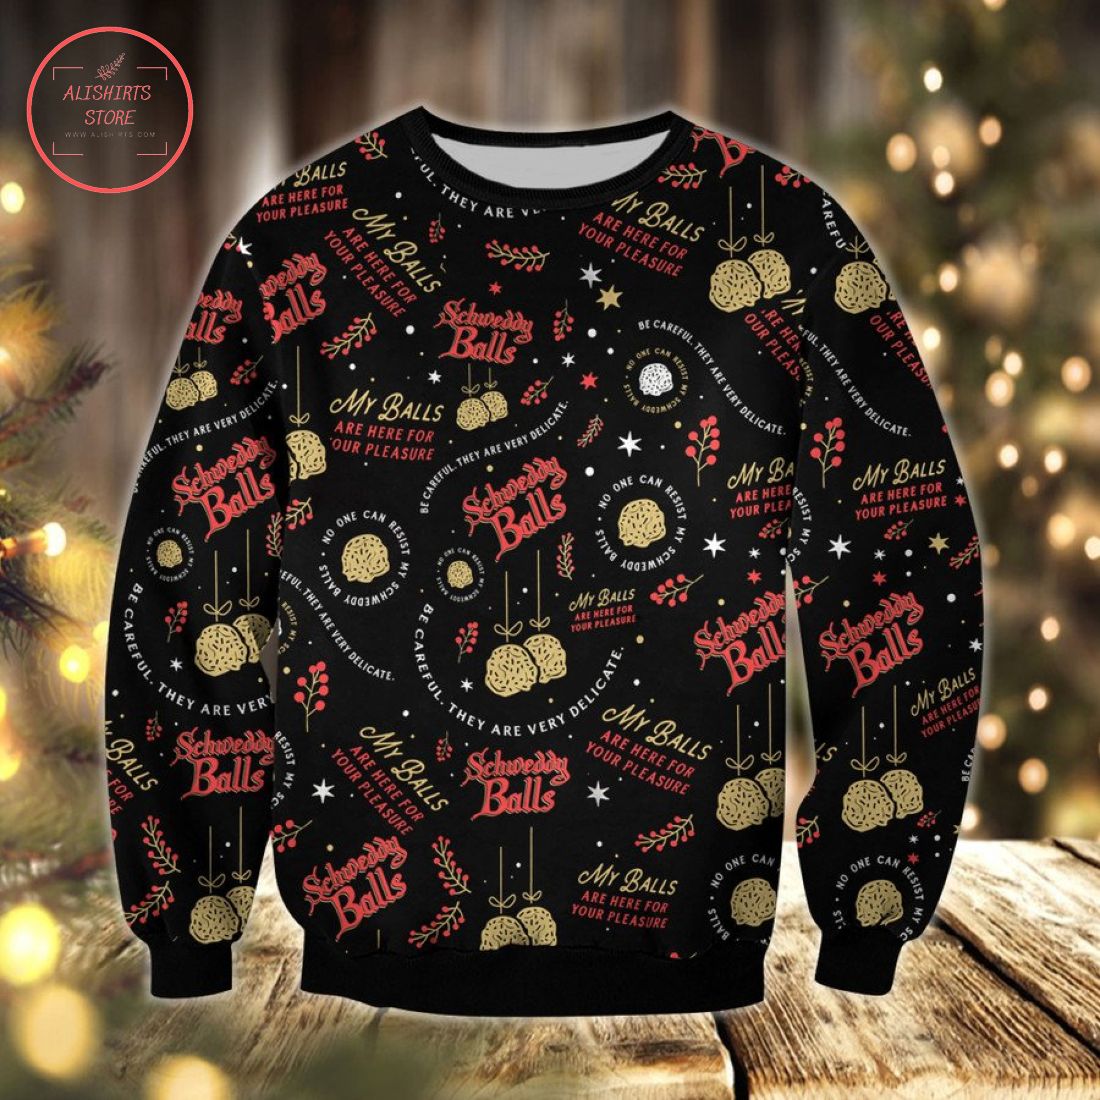 Schweddy Balls Ugly Christmas Sweater